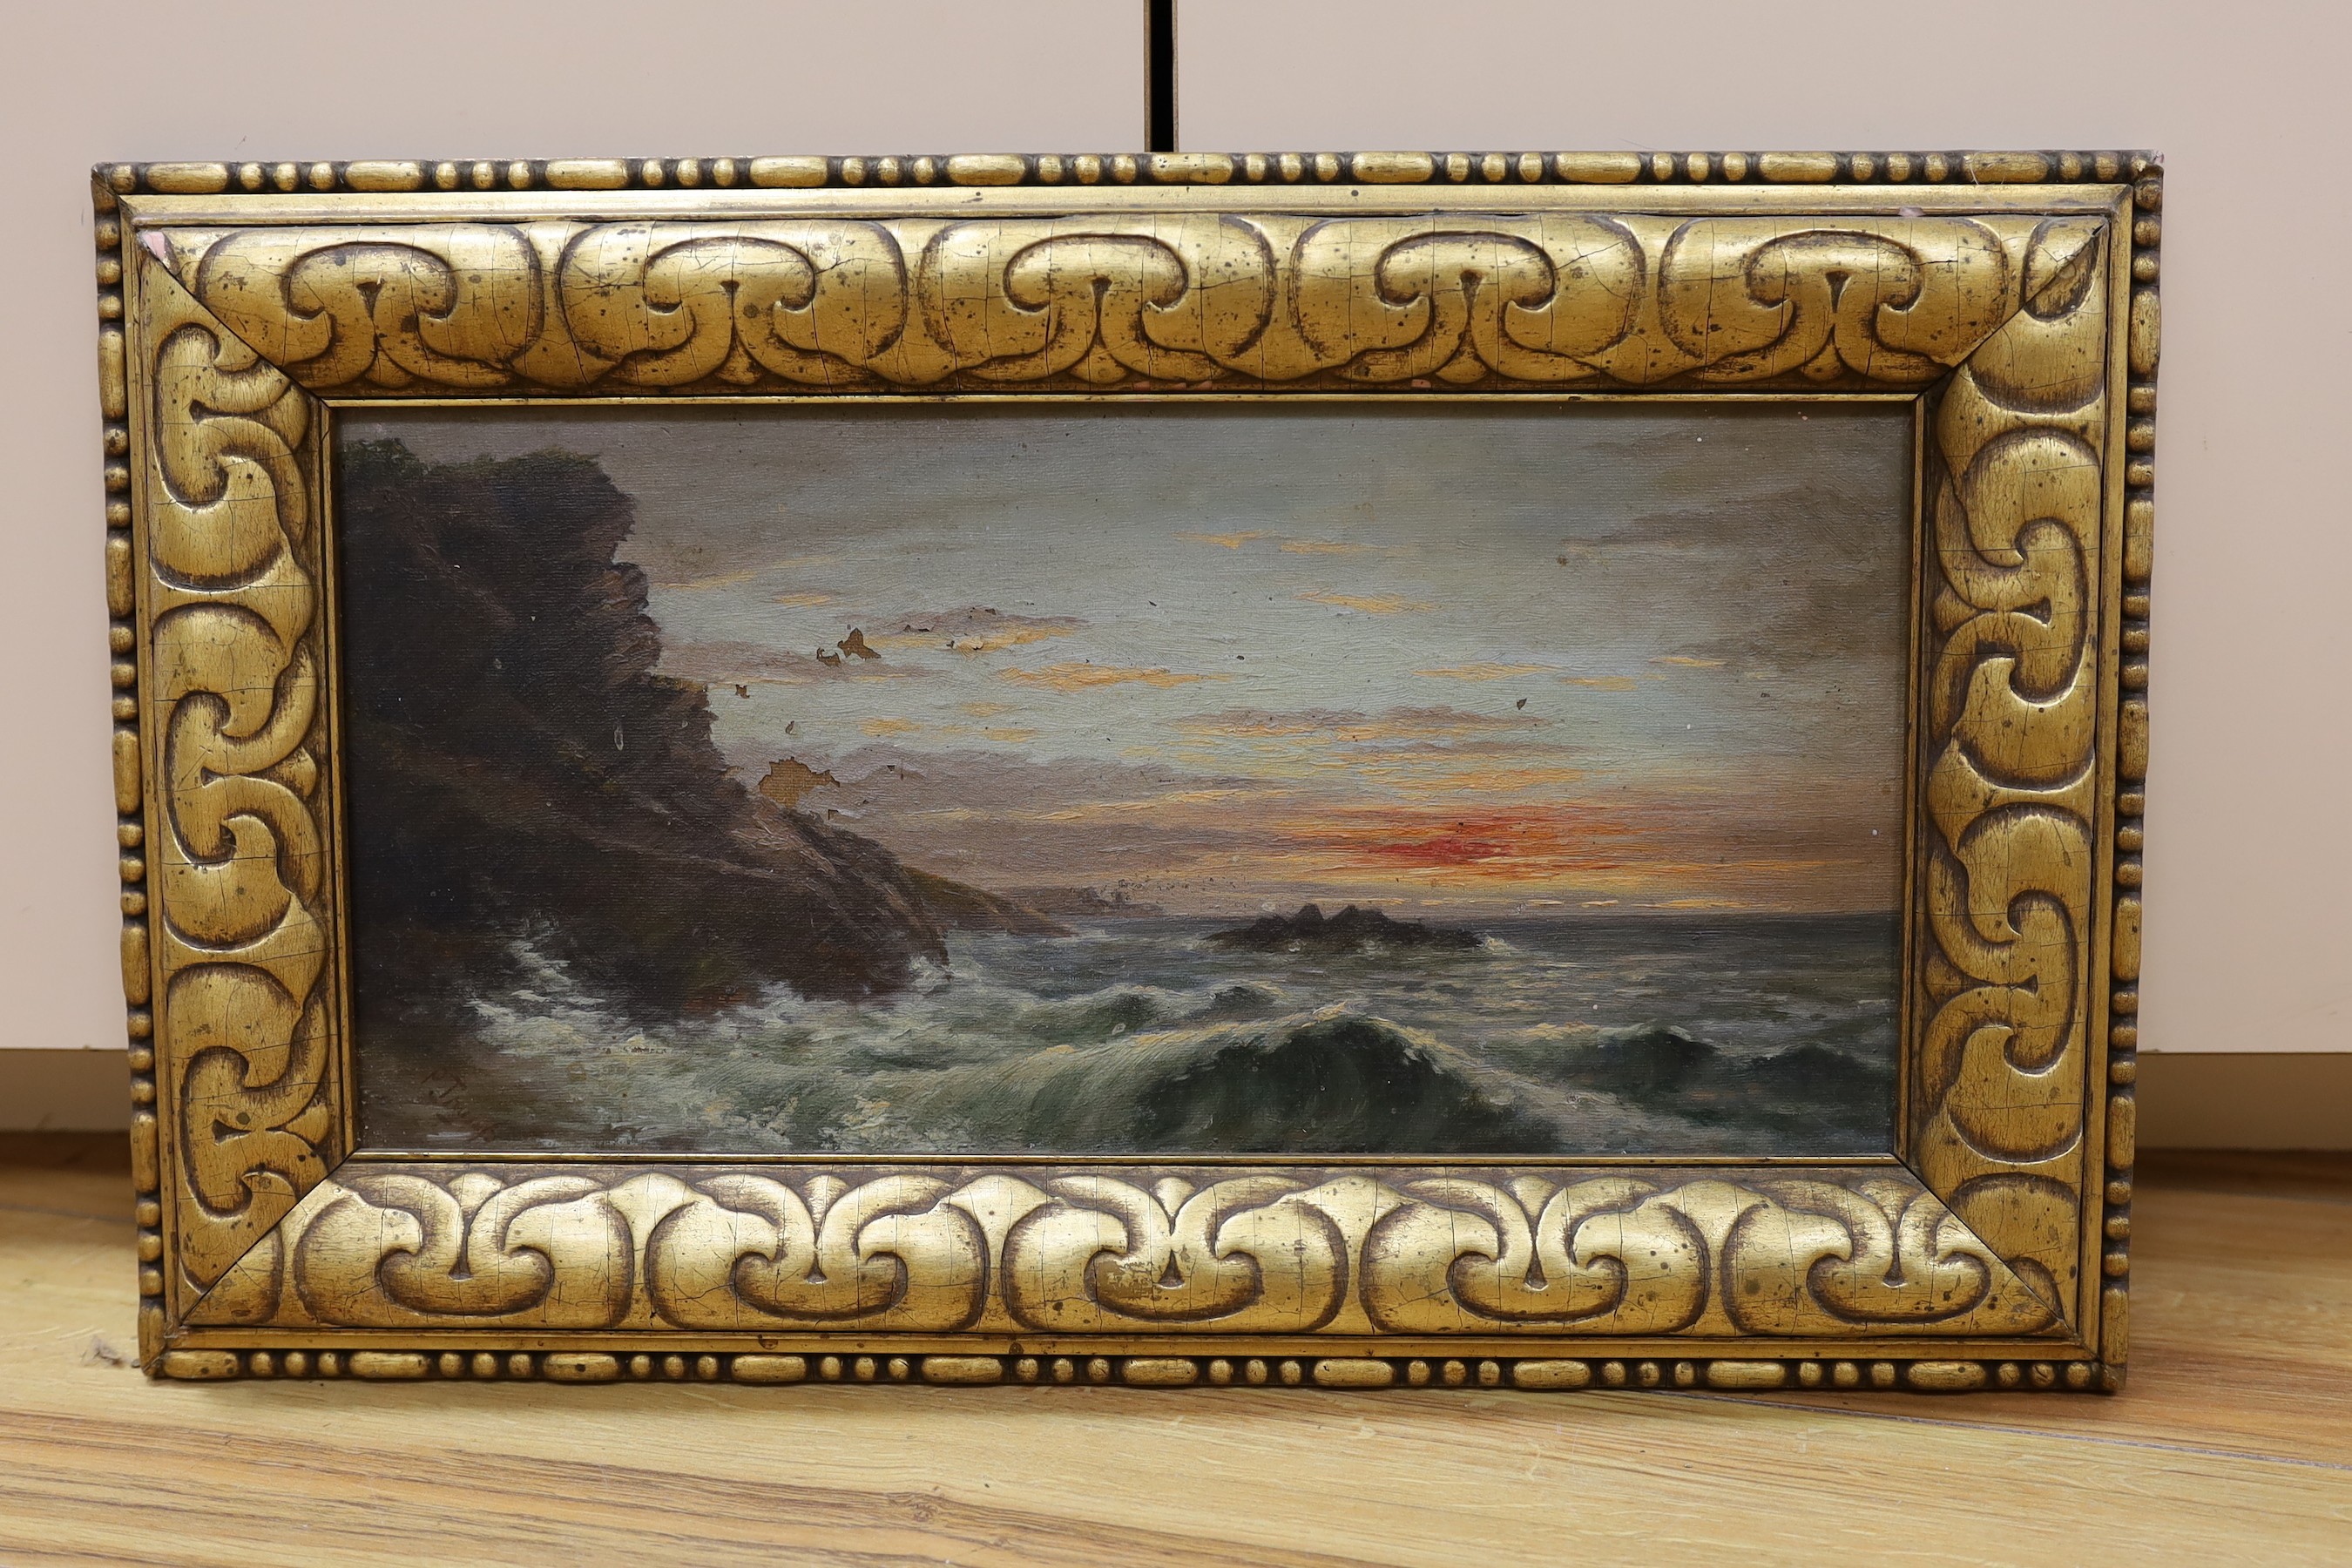 P. Jessop, oil on canvas, Sunset along the coast, indistinctly signed, 19 x 39cm